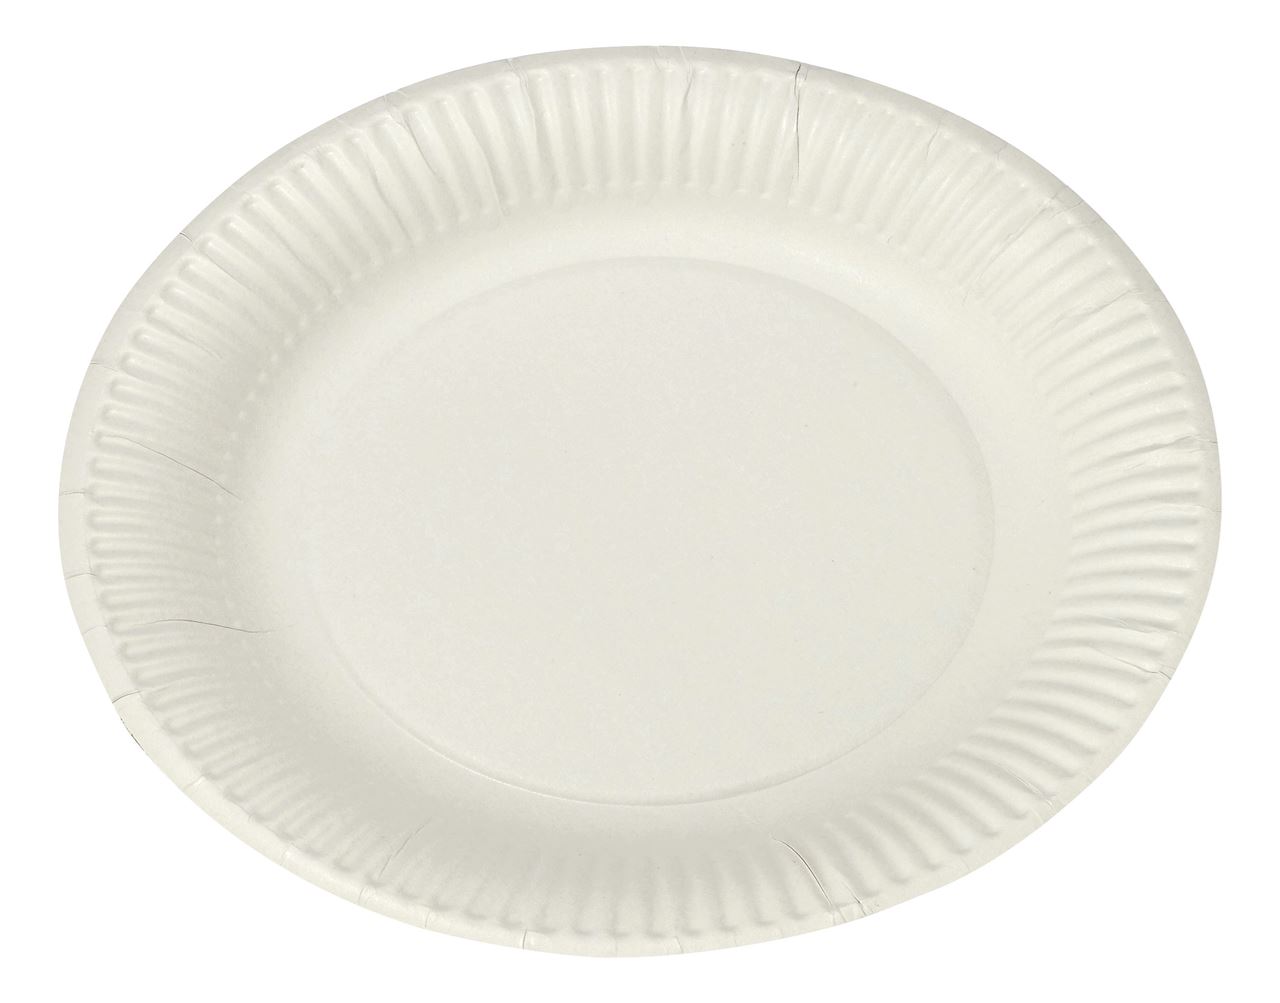 Assiette jetable ronde carton purepate blanc 23 cm x 100